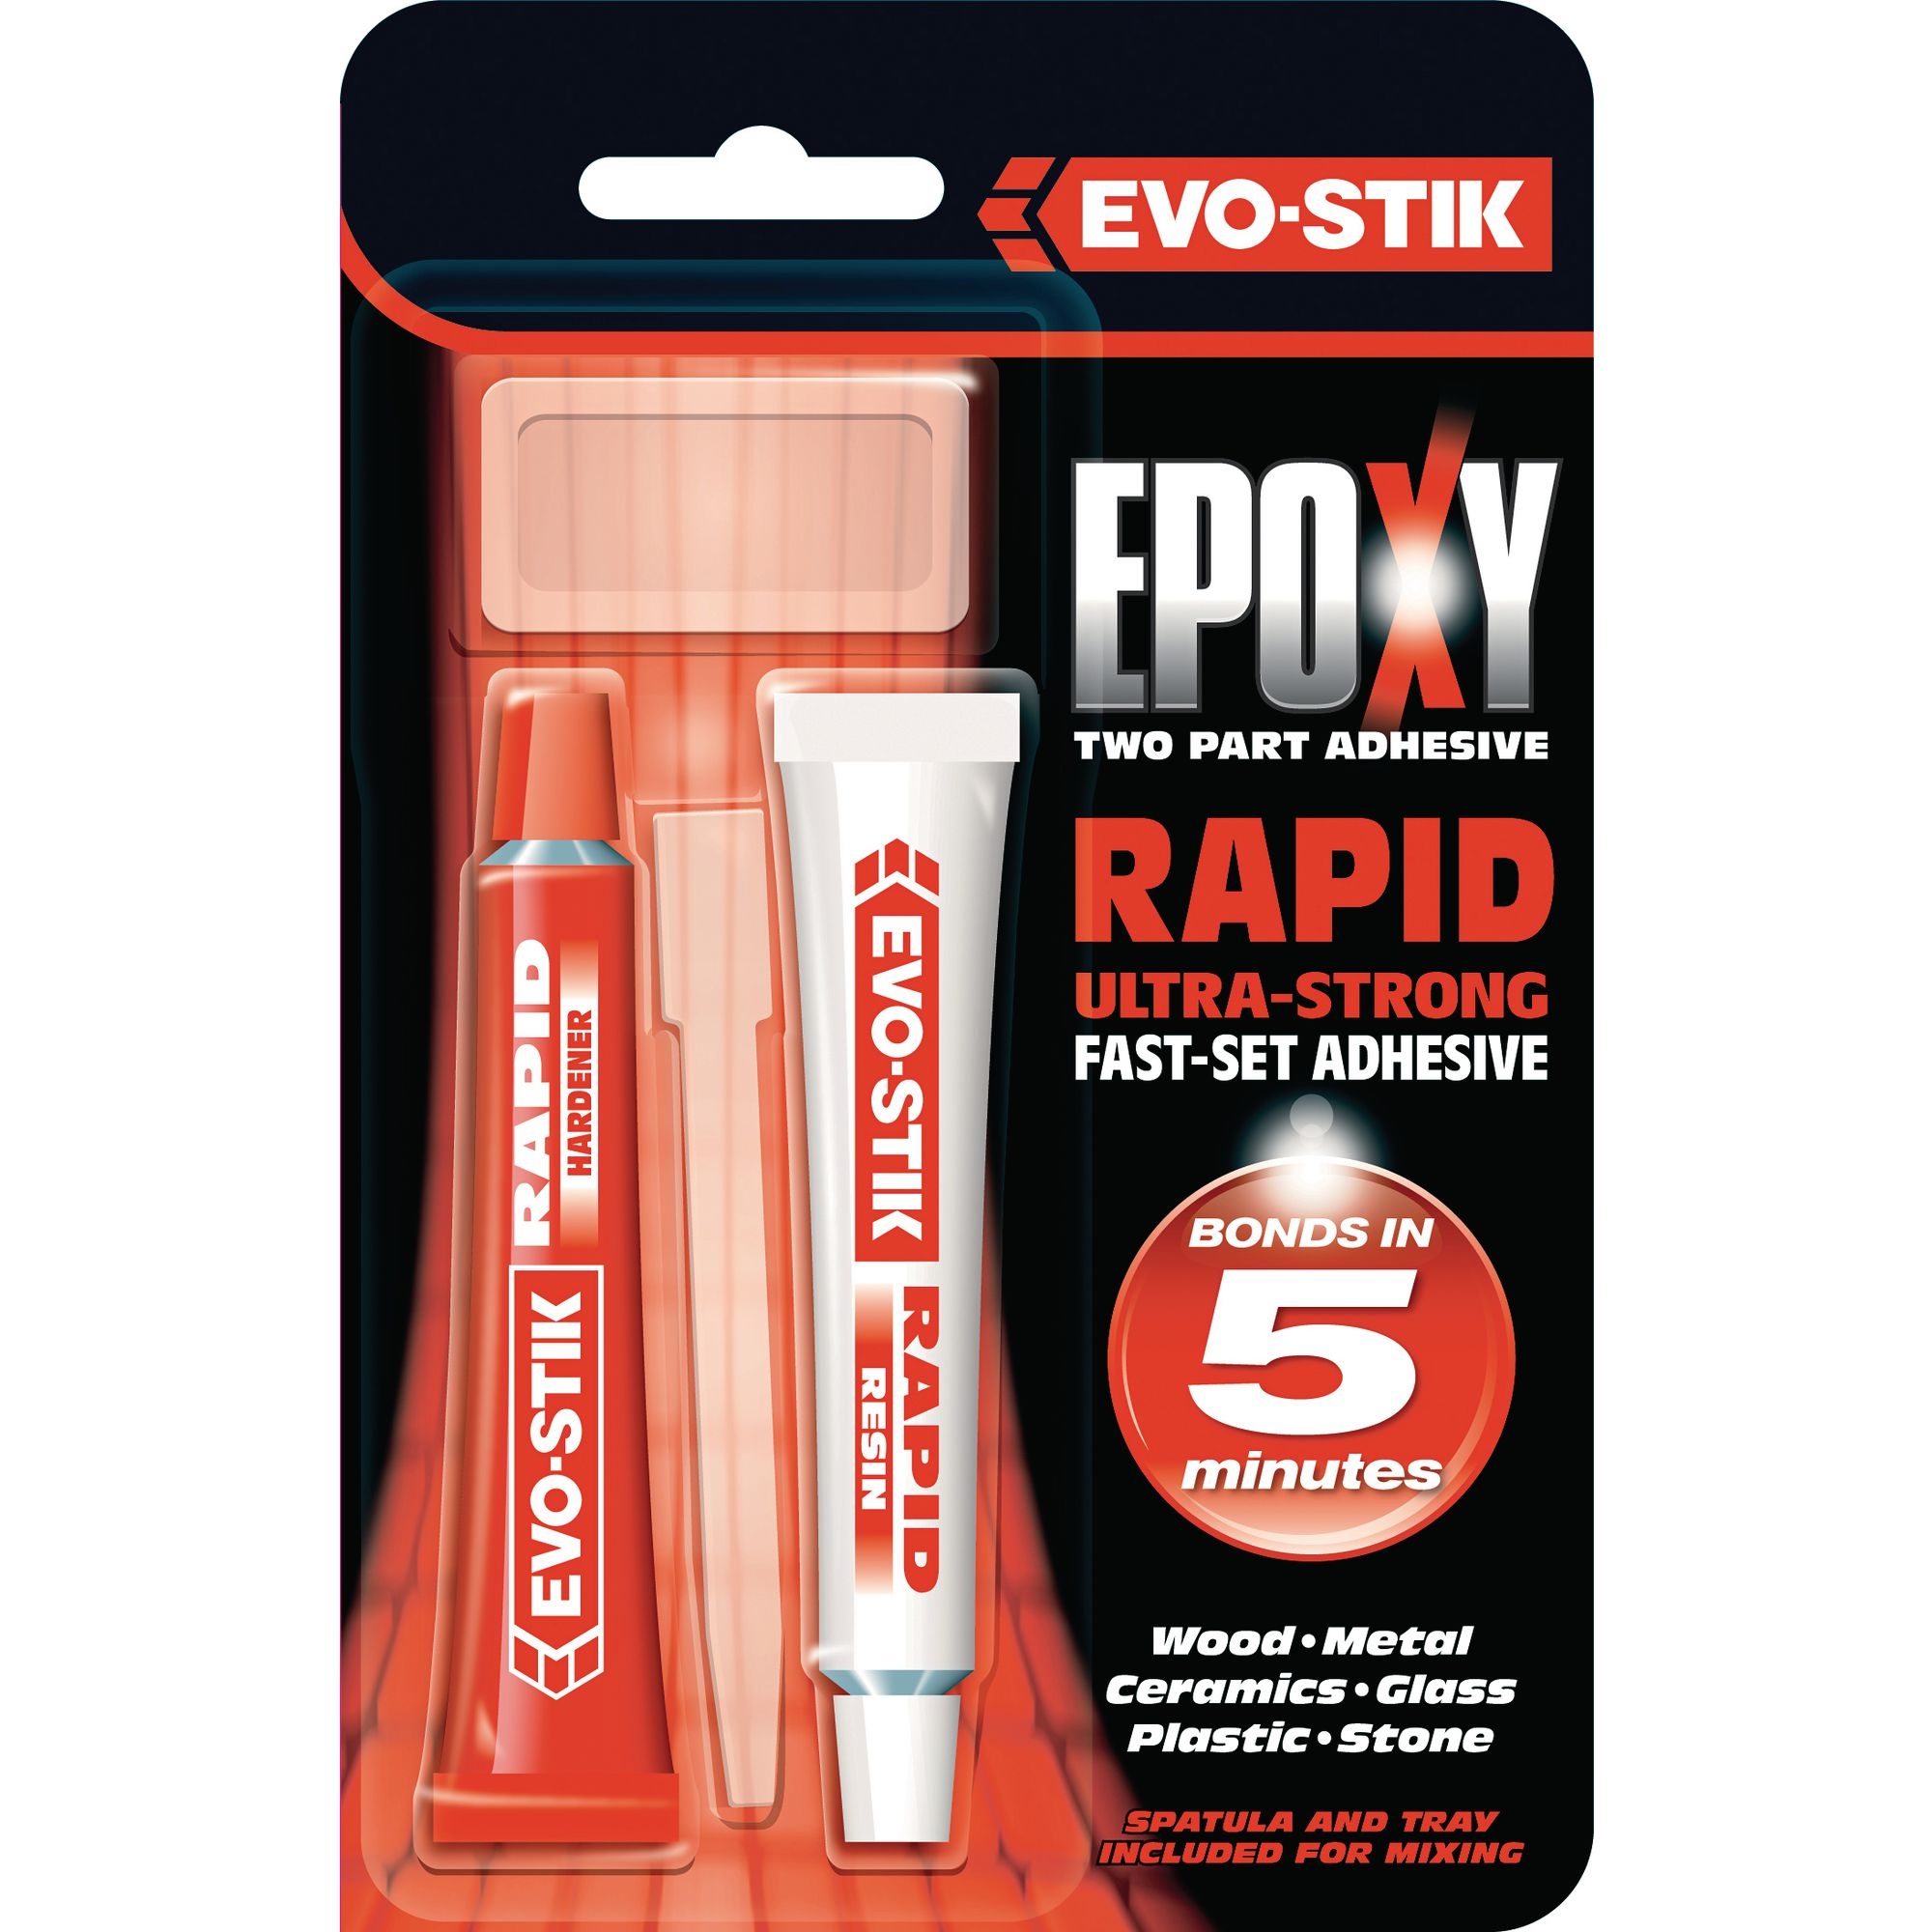 Evo-Stik Epoxy Rapid